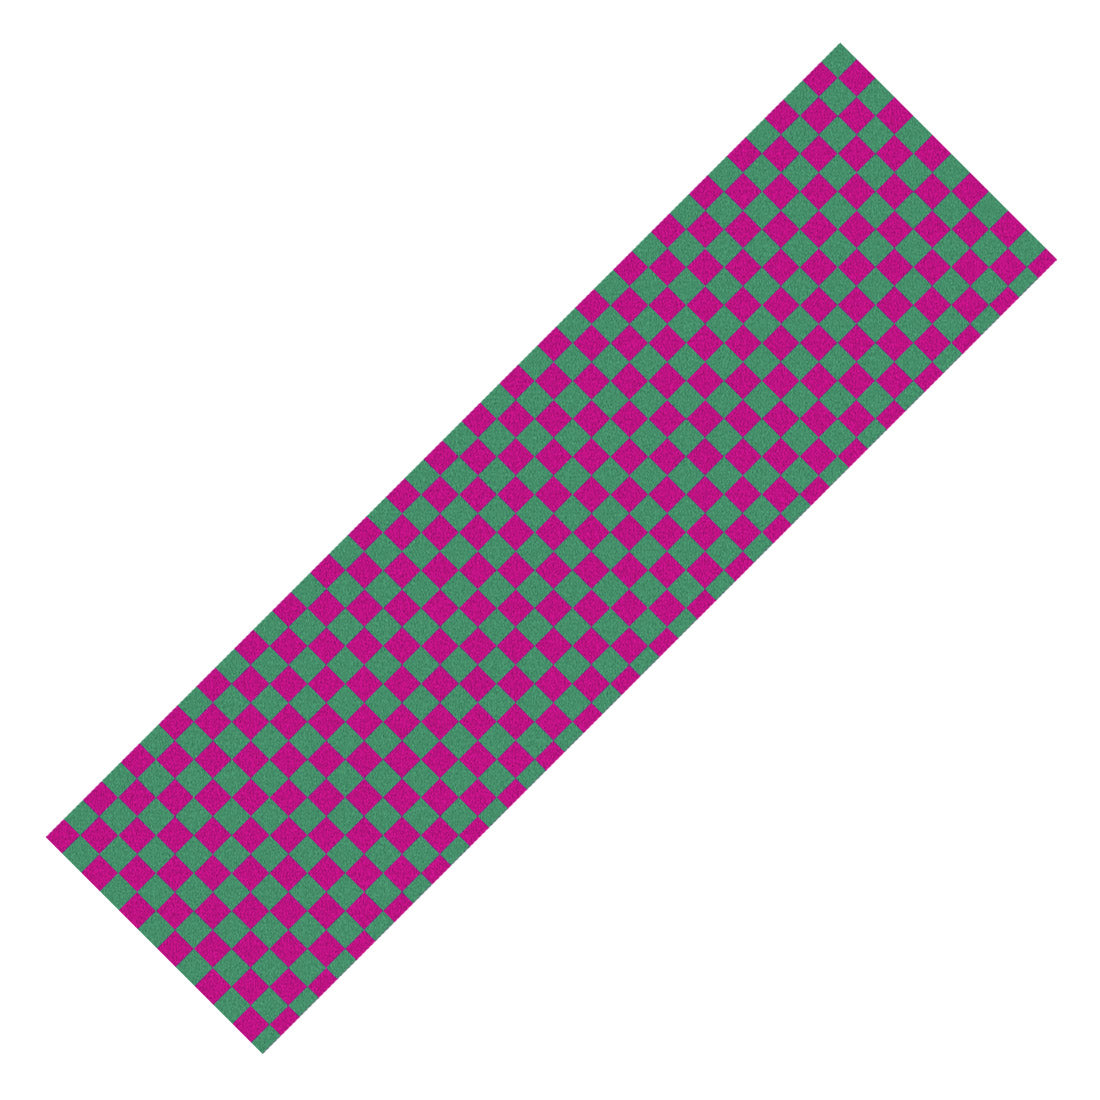 Fruity Griptape - Checkered Green Pink Check Griptape